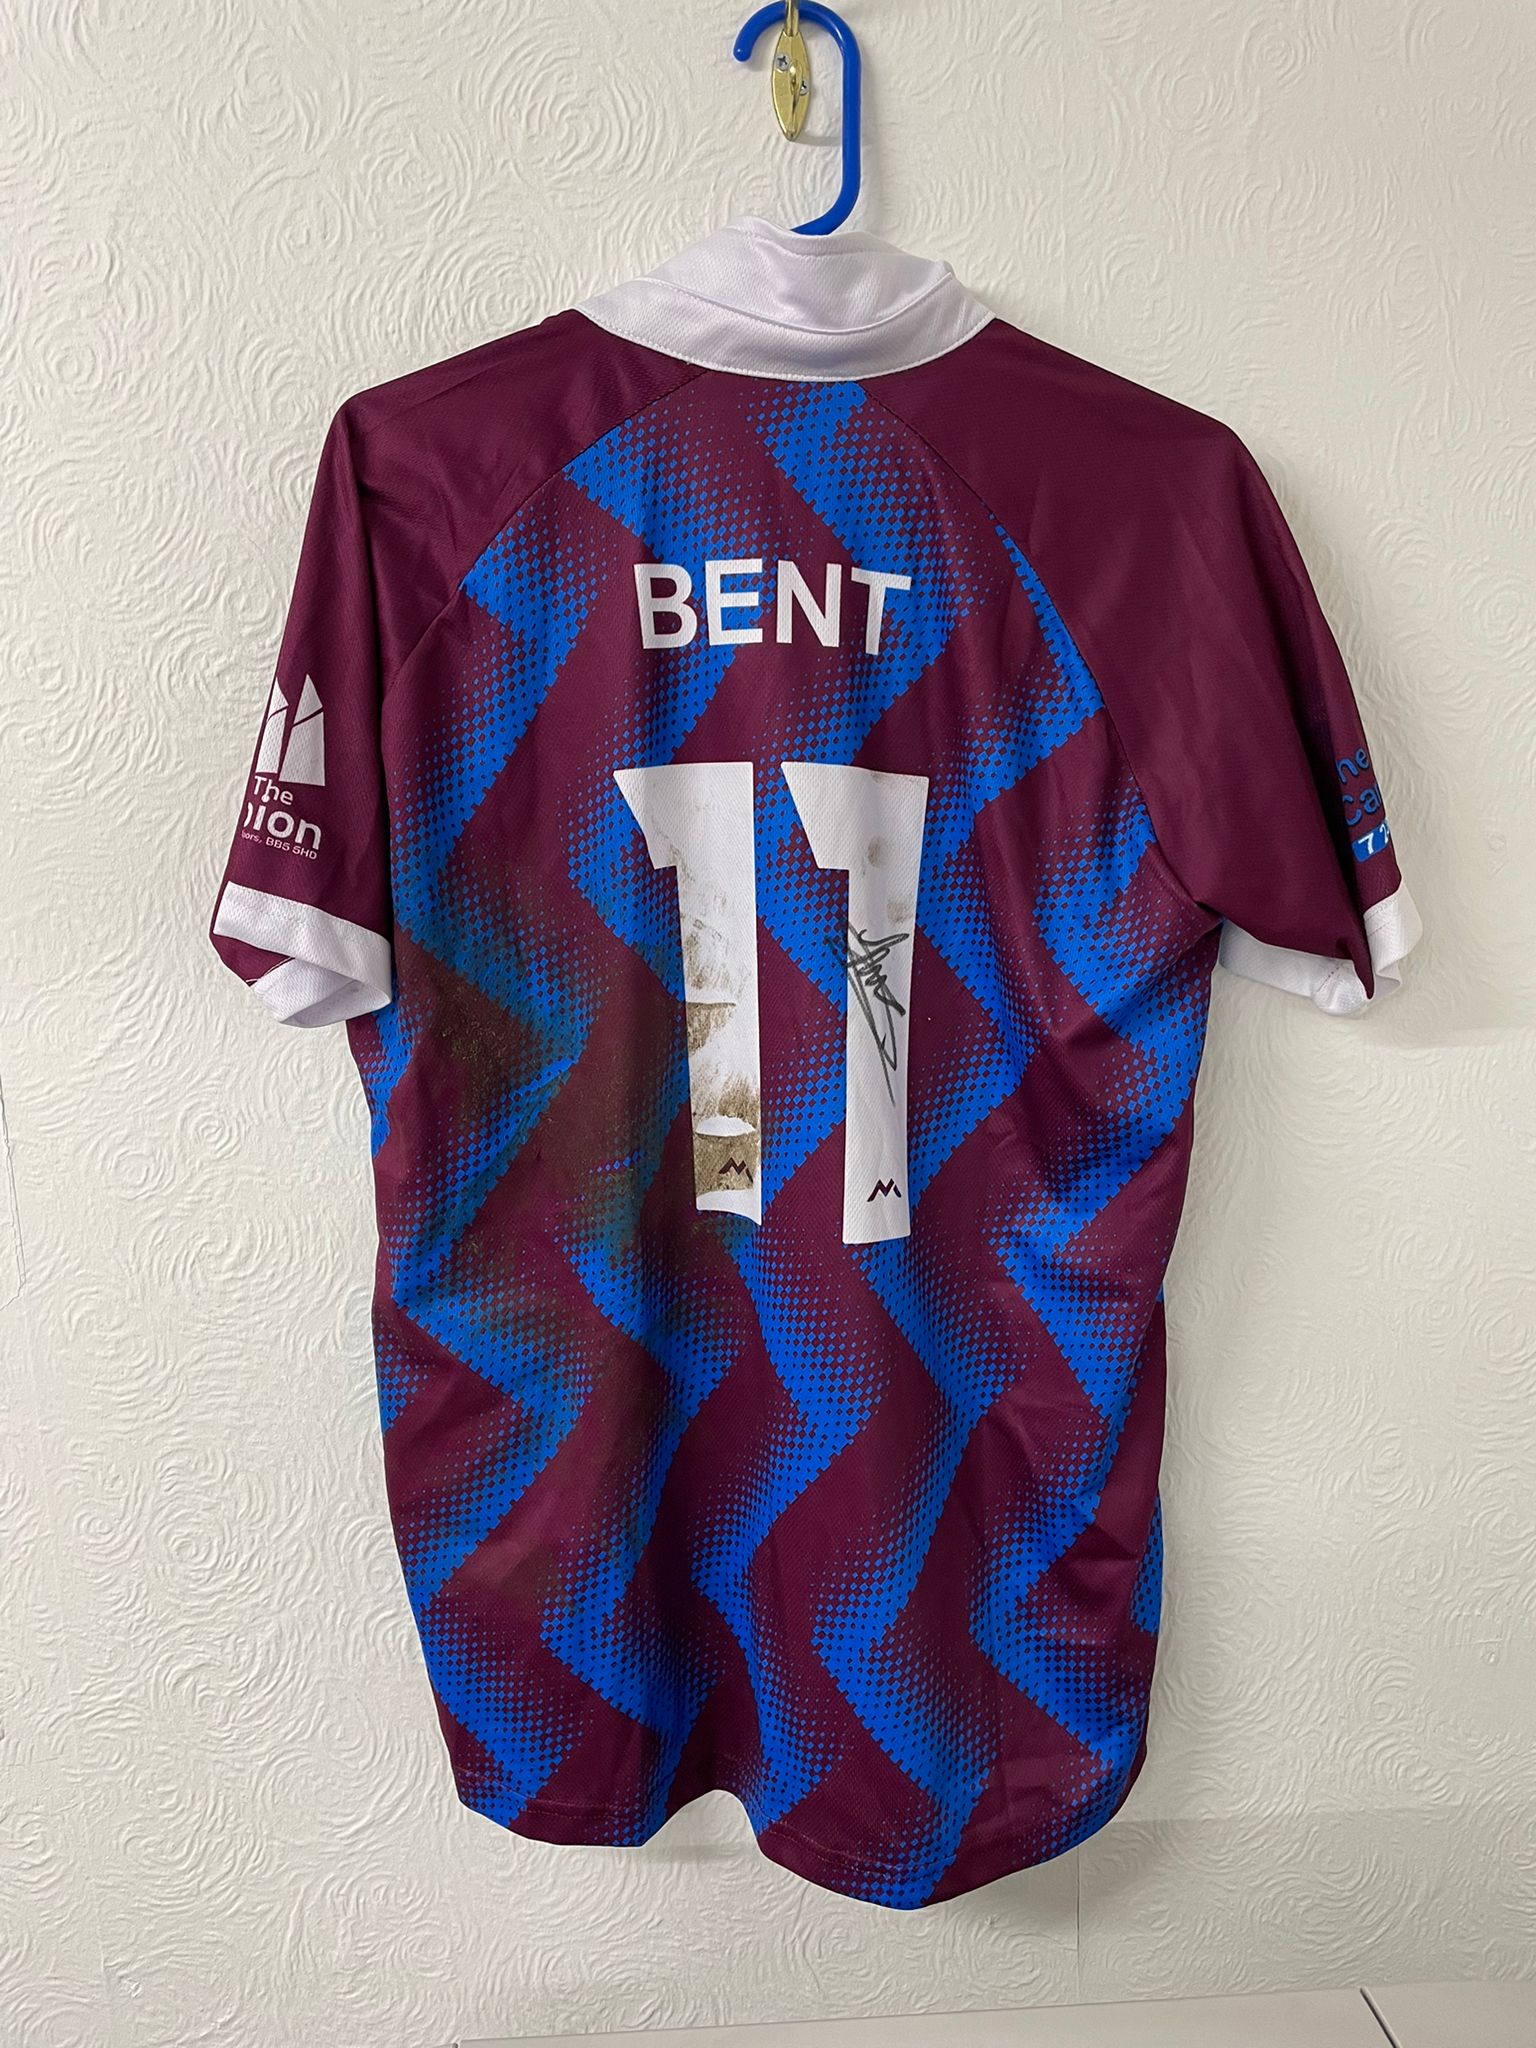 Junior Bent – Len Johnrose Legacy Trophy “Signed” match worn shirt ...